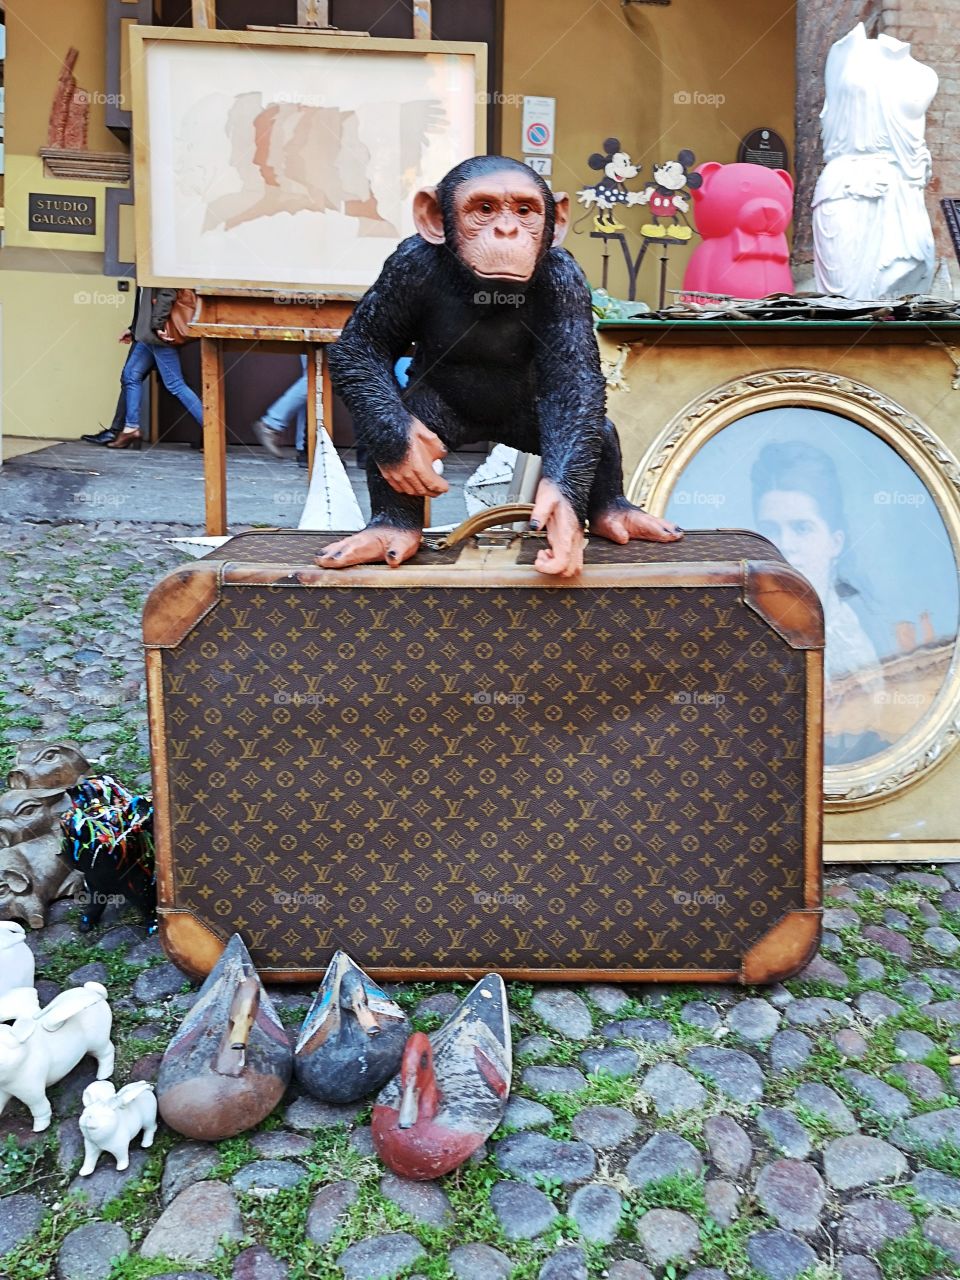 monkey toy on a Louis Vuitton bag